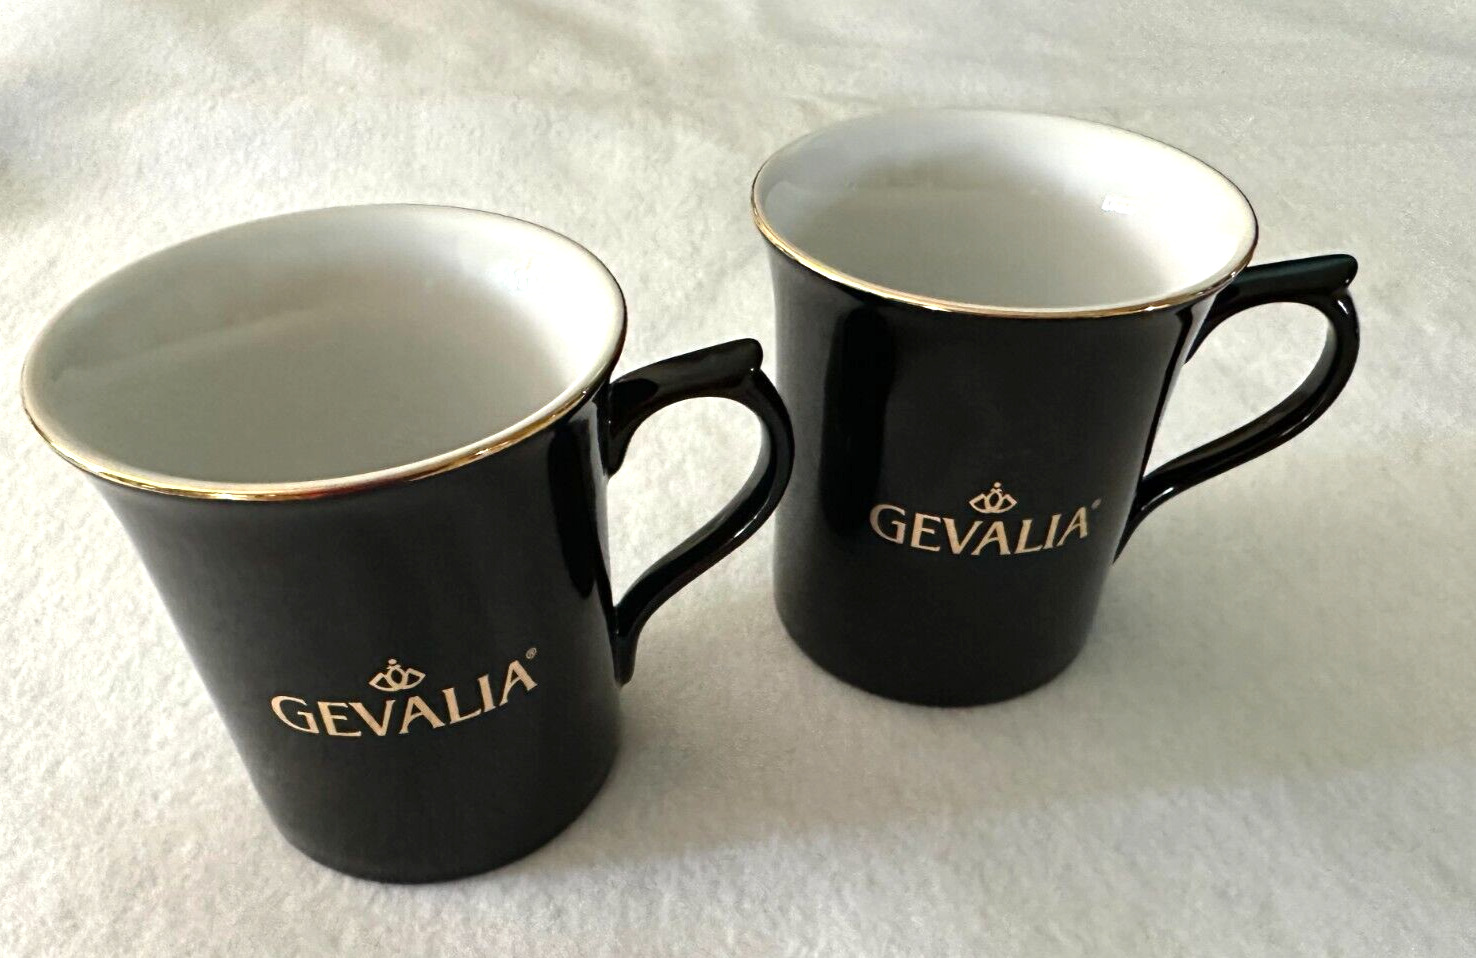 GEVALIA Black with Gold Trim 10 oz Coffee Mugs Set of 2